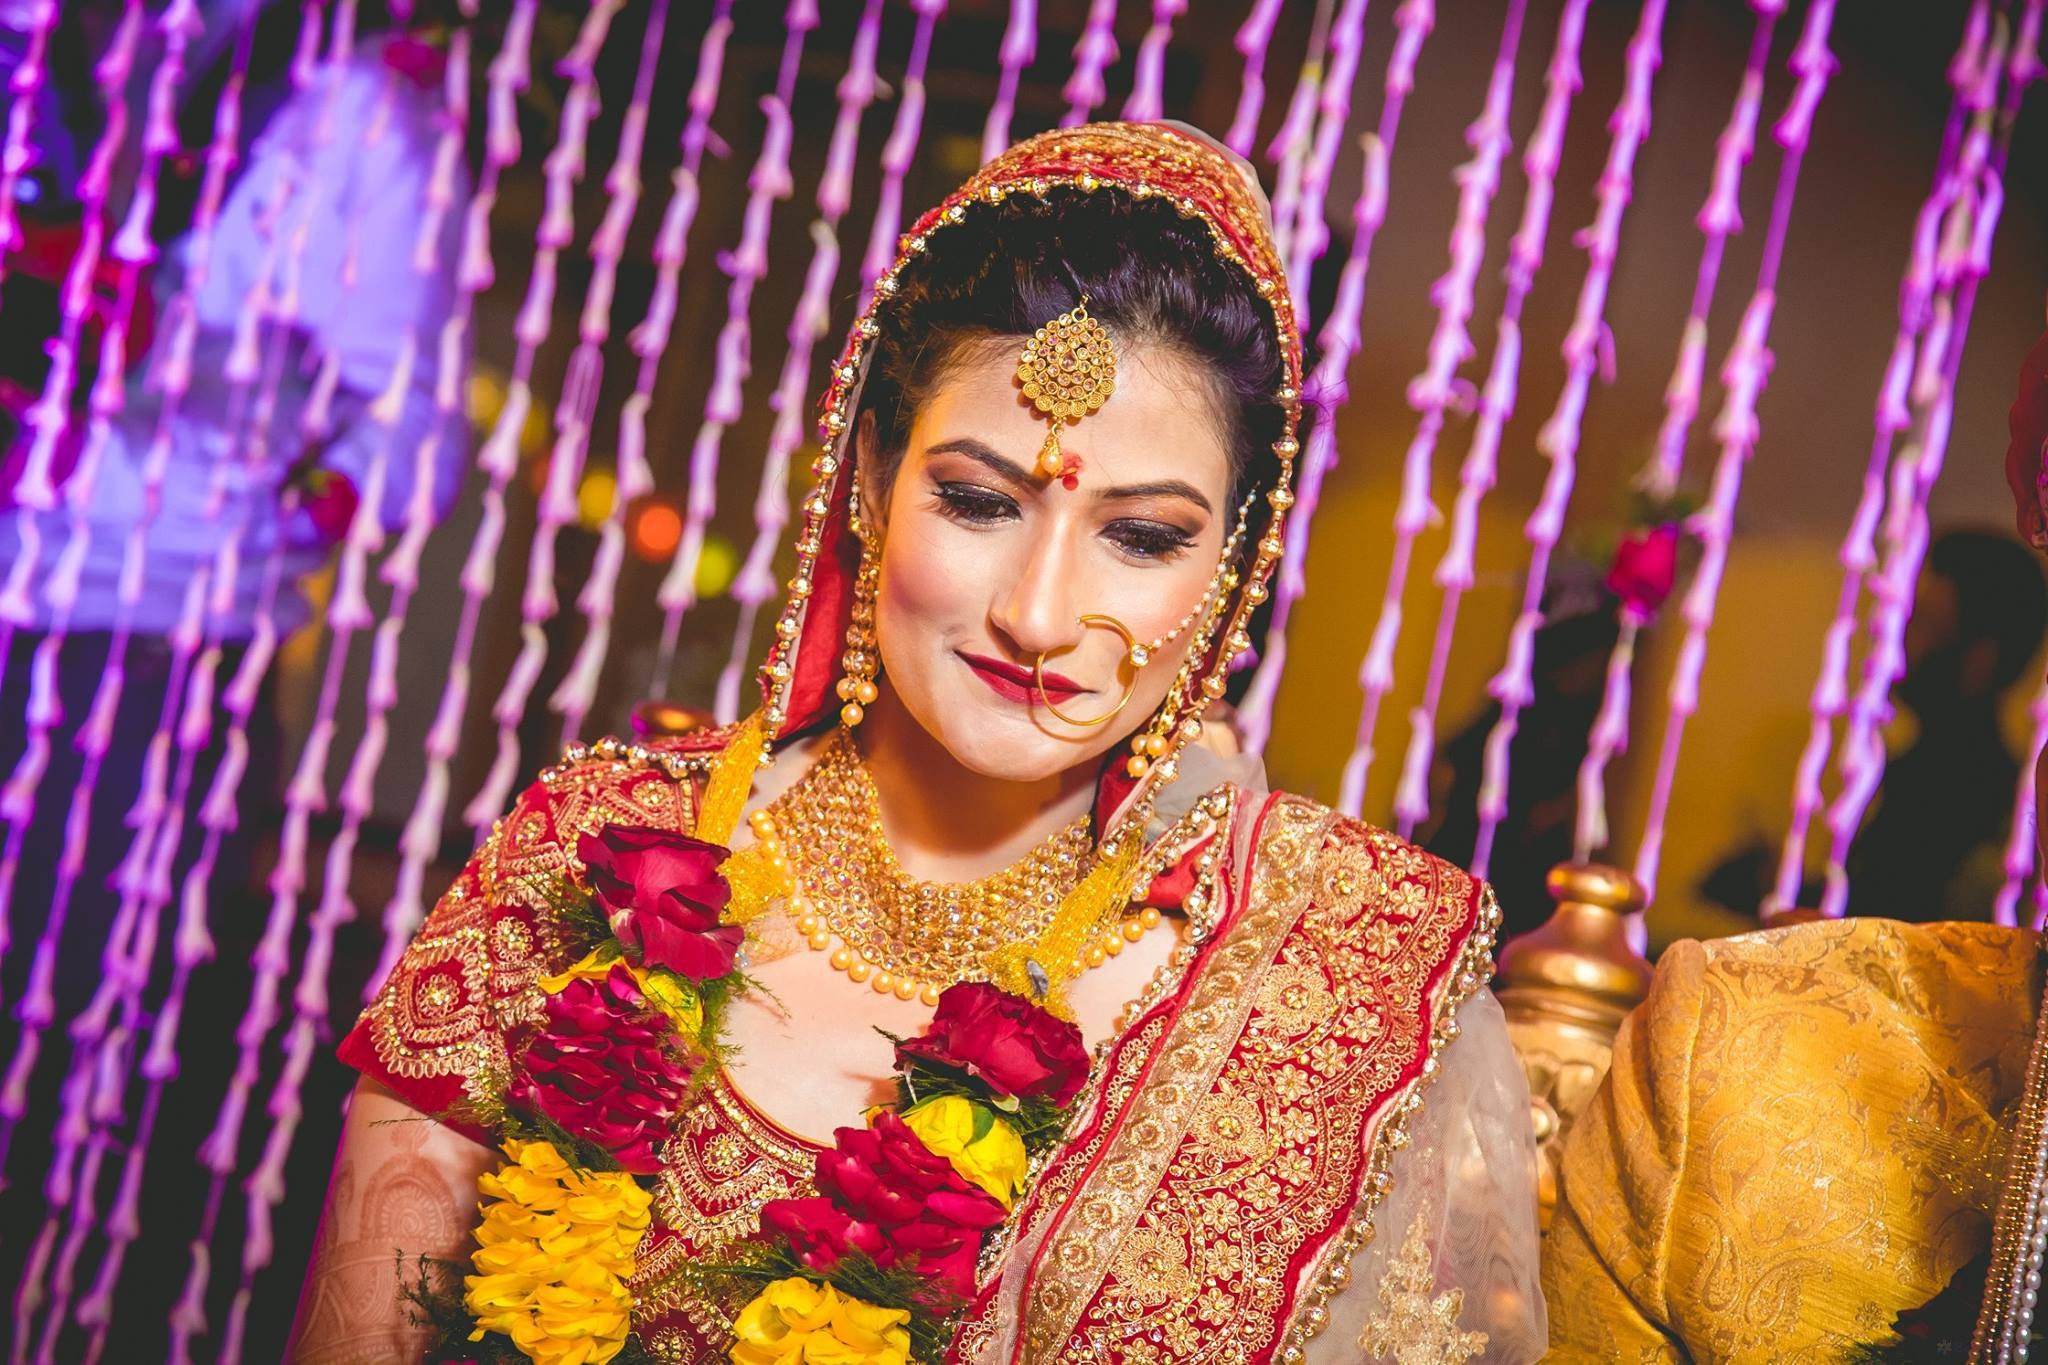 Studio RGB by Raunak Wedding Photographer, Delhi NCR